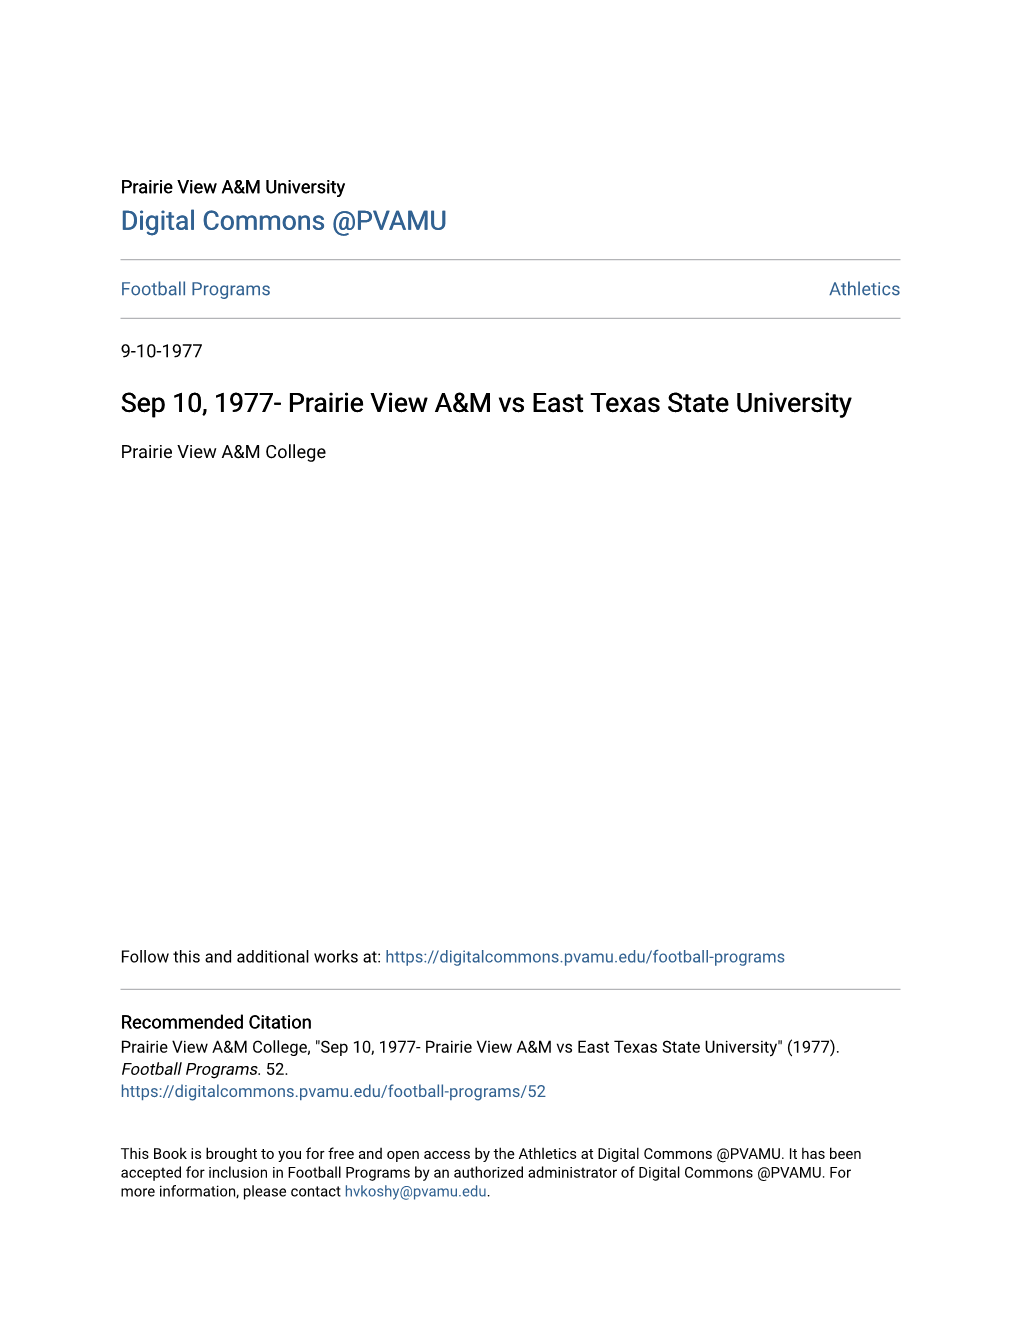 Prairie View A&M Vs East Texas State University